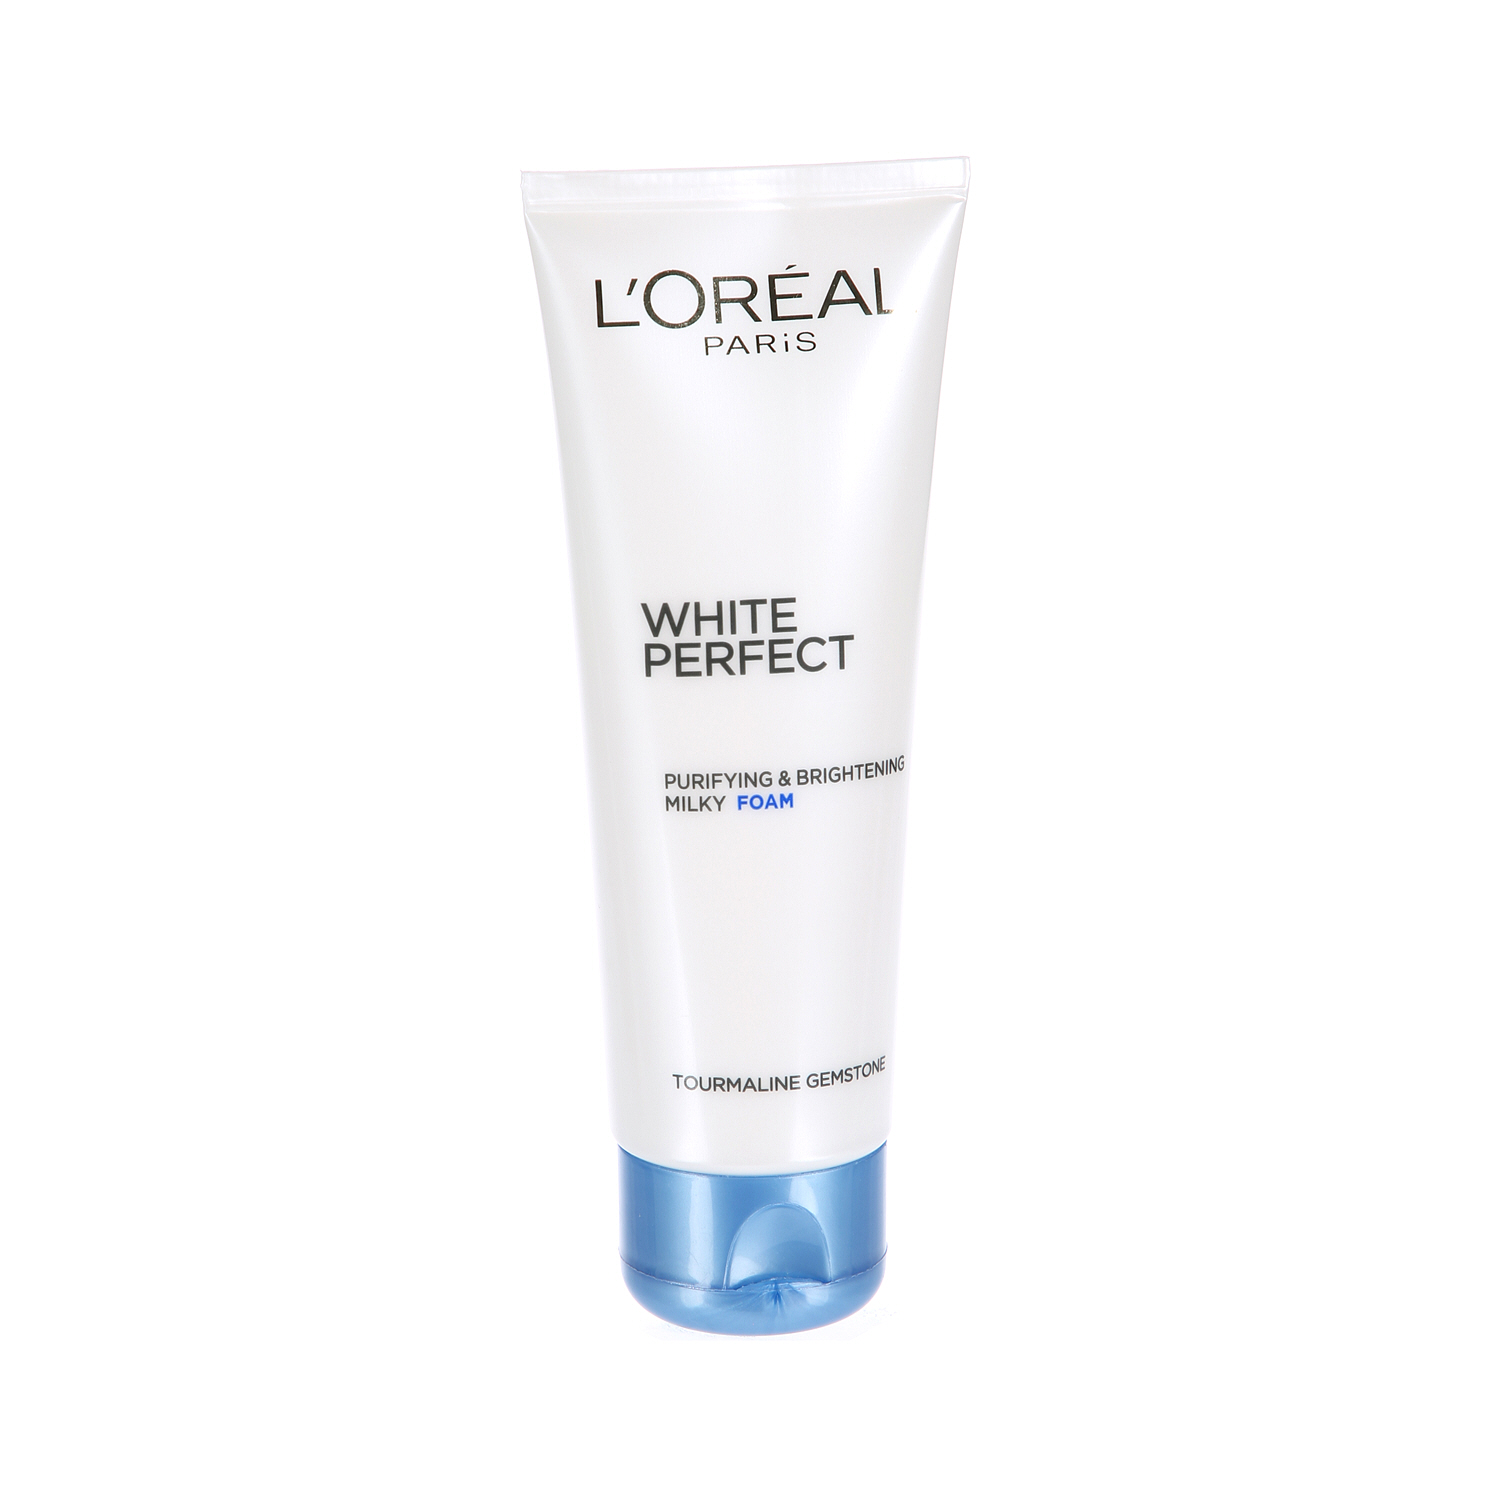 L'Oreal White Perfect Purifies & Brightness Milky Foam 100ml